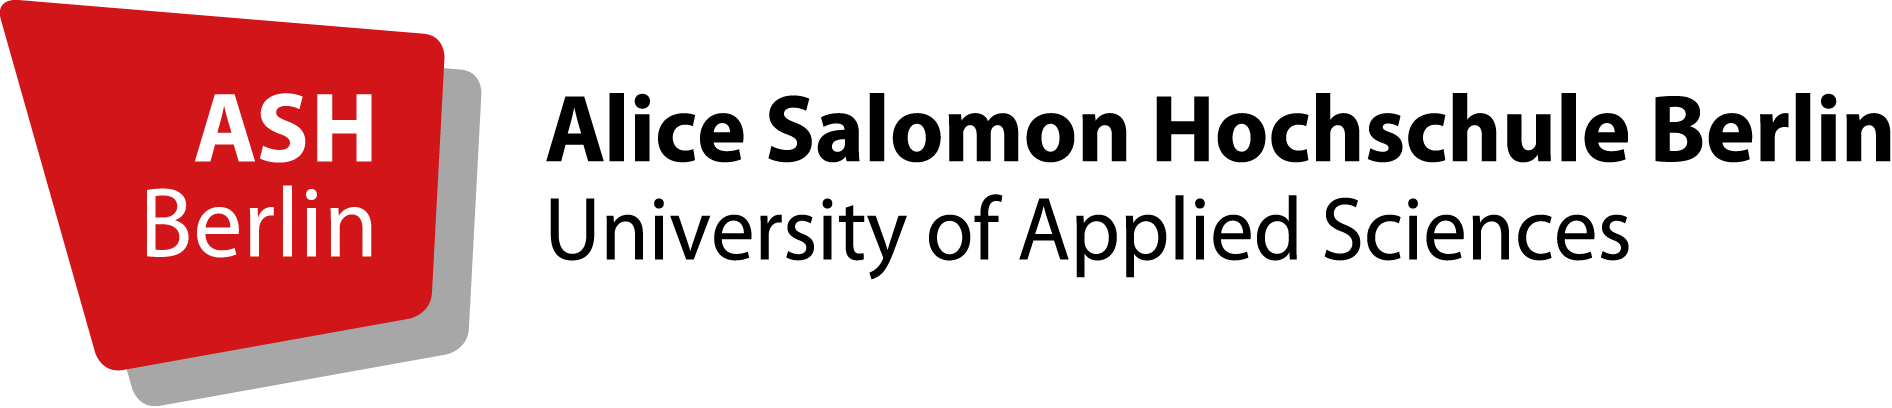 Alice-Salomon Hochschule Berlin